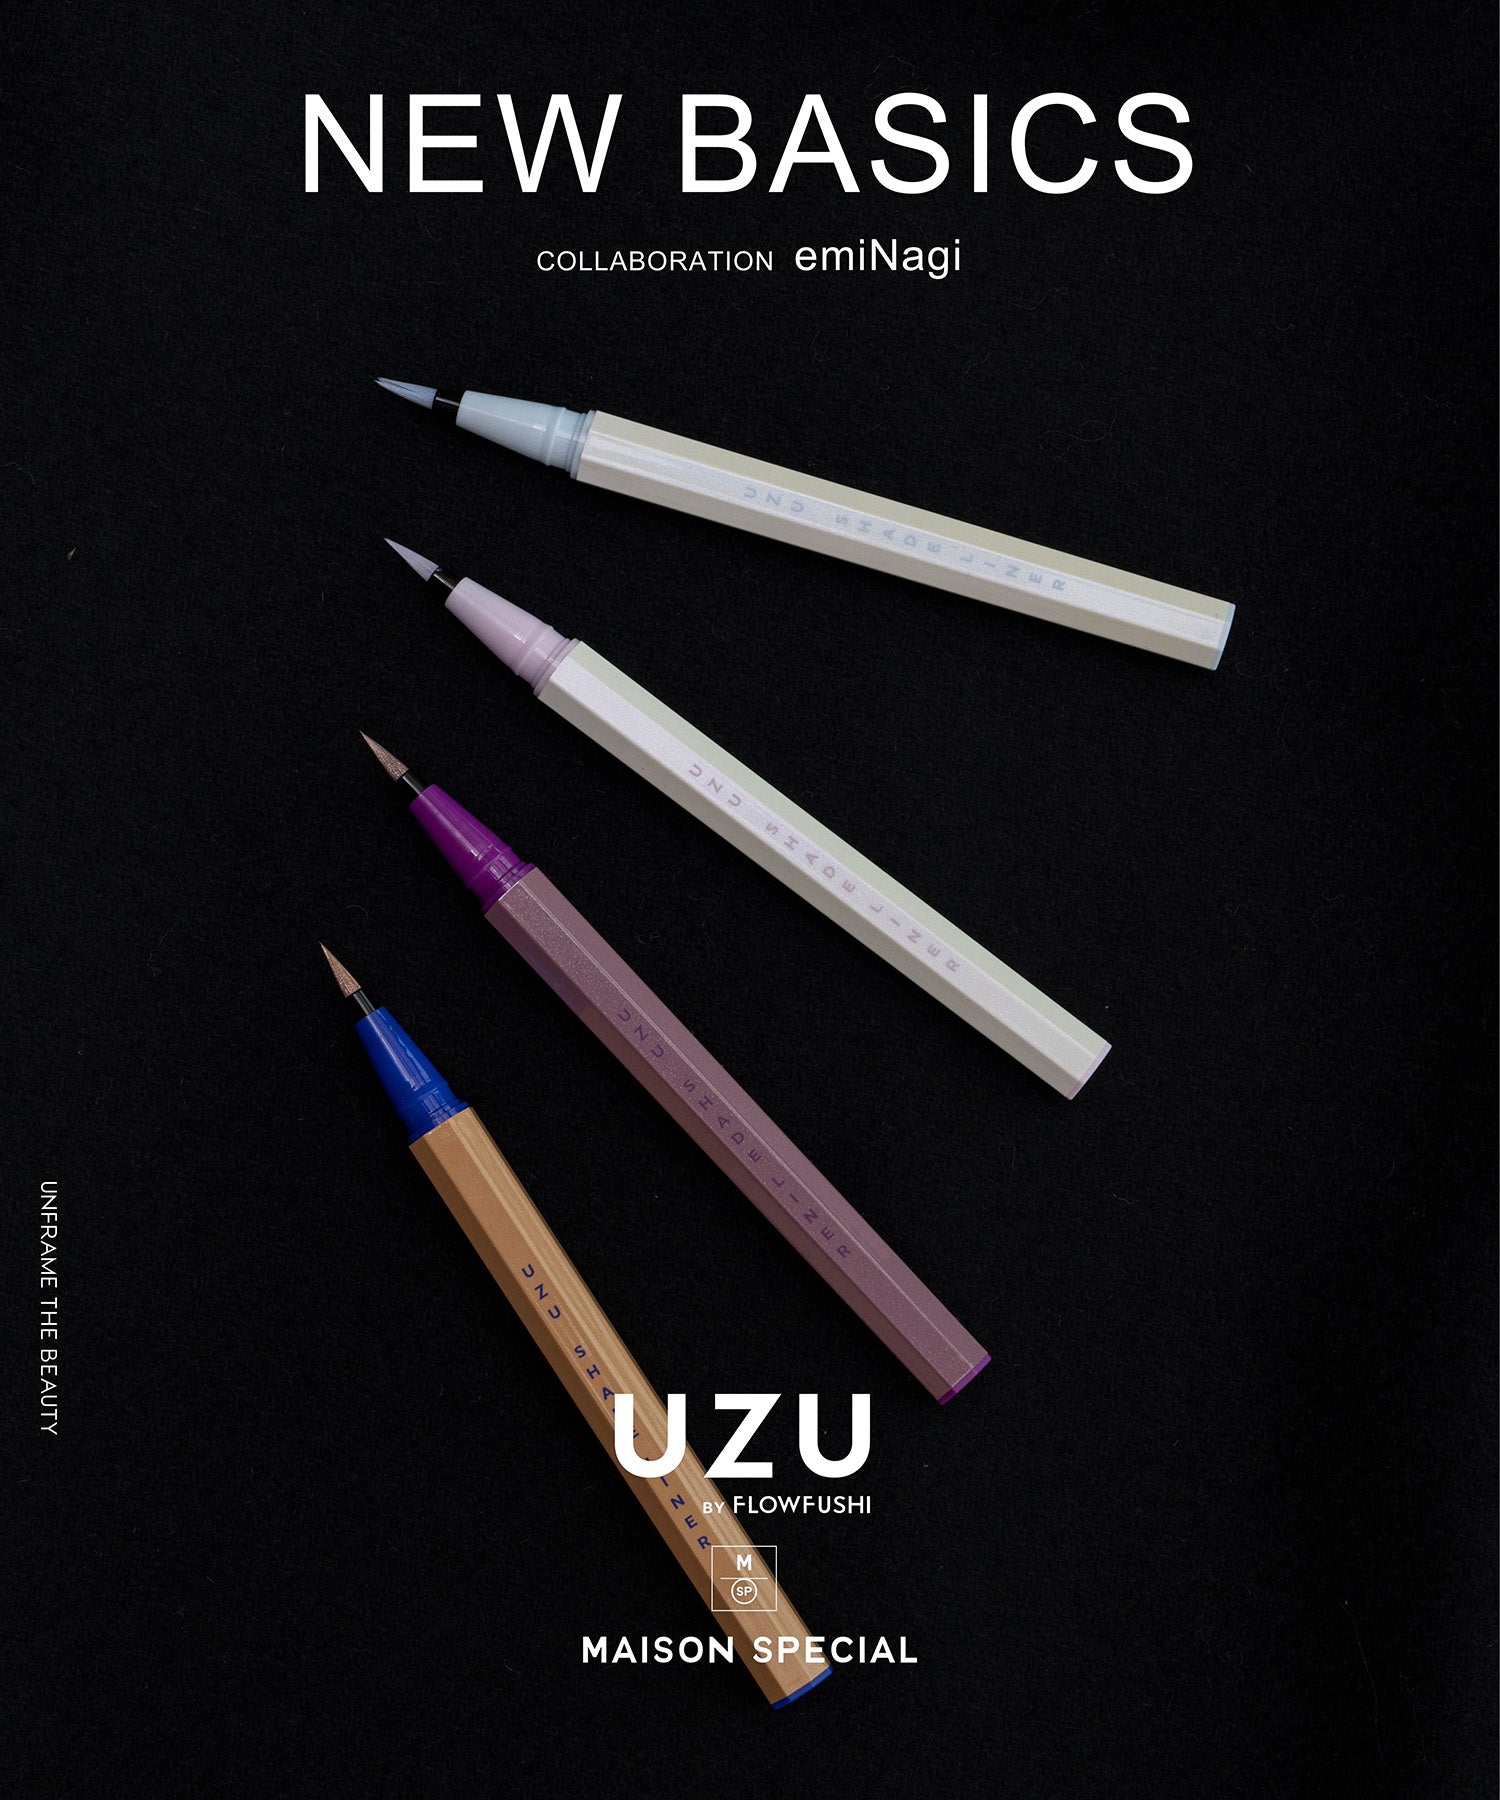 【MAISON SPECIAL x UZU “NEW BASICS” Collaboration with emiNagi】10/14(土)より UZU SHADE LINER コレクションの先行販売とスペシャルイベントのご案内。